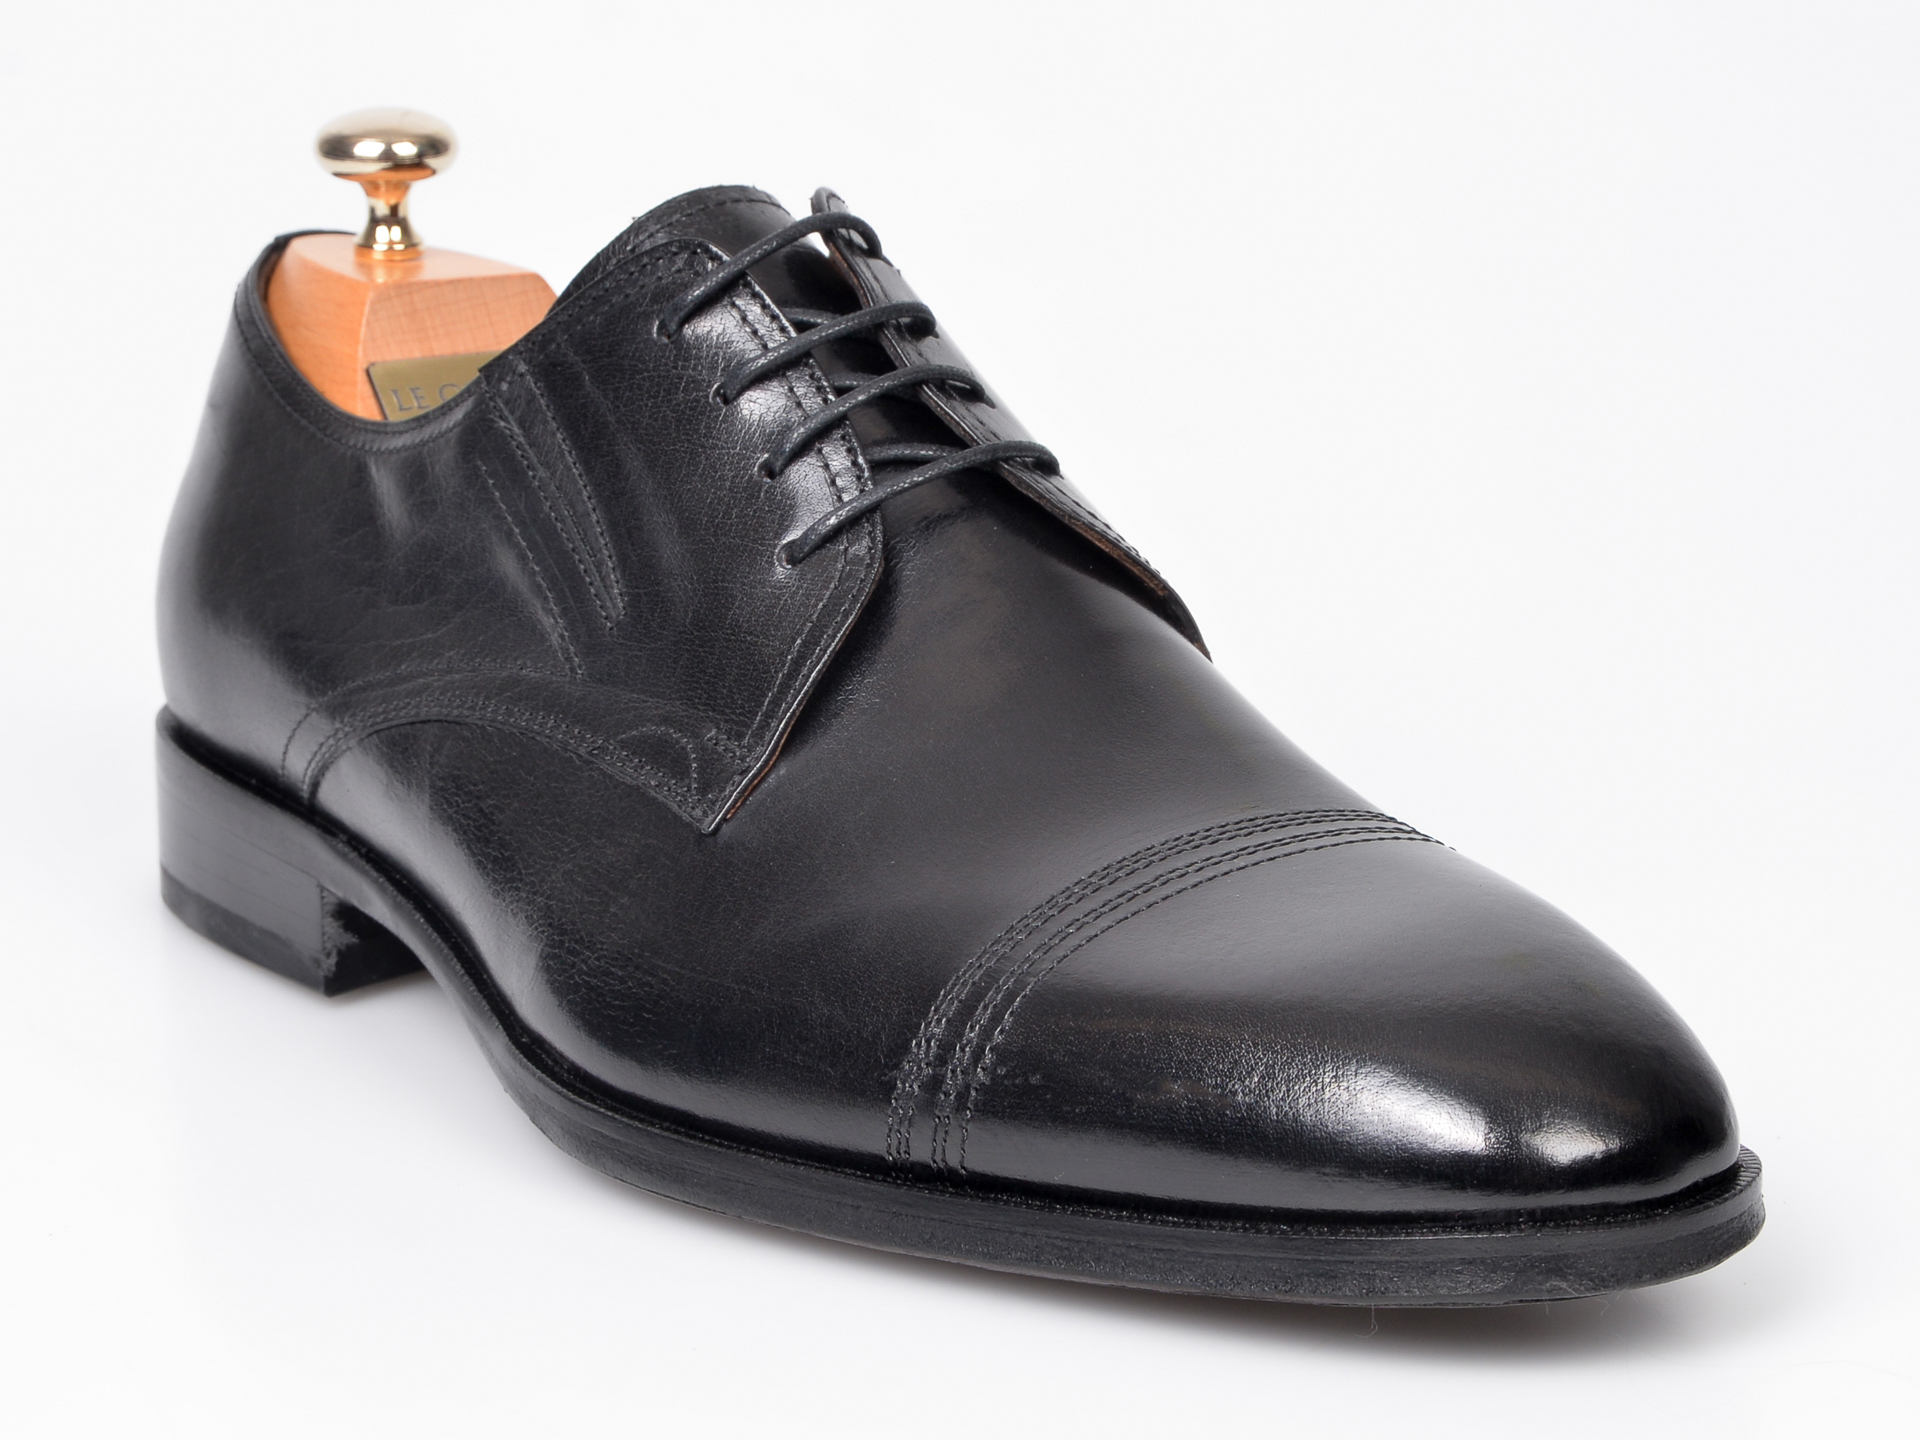 Pantofi LE COLONEL negri, 48433, din piele naturala